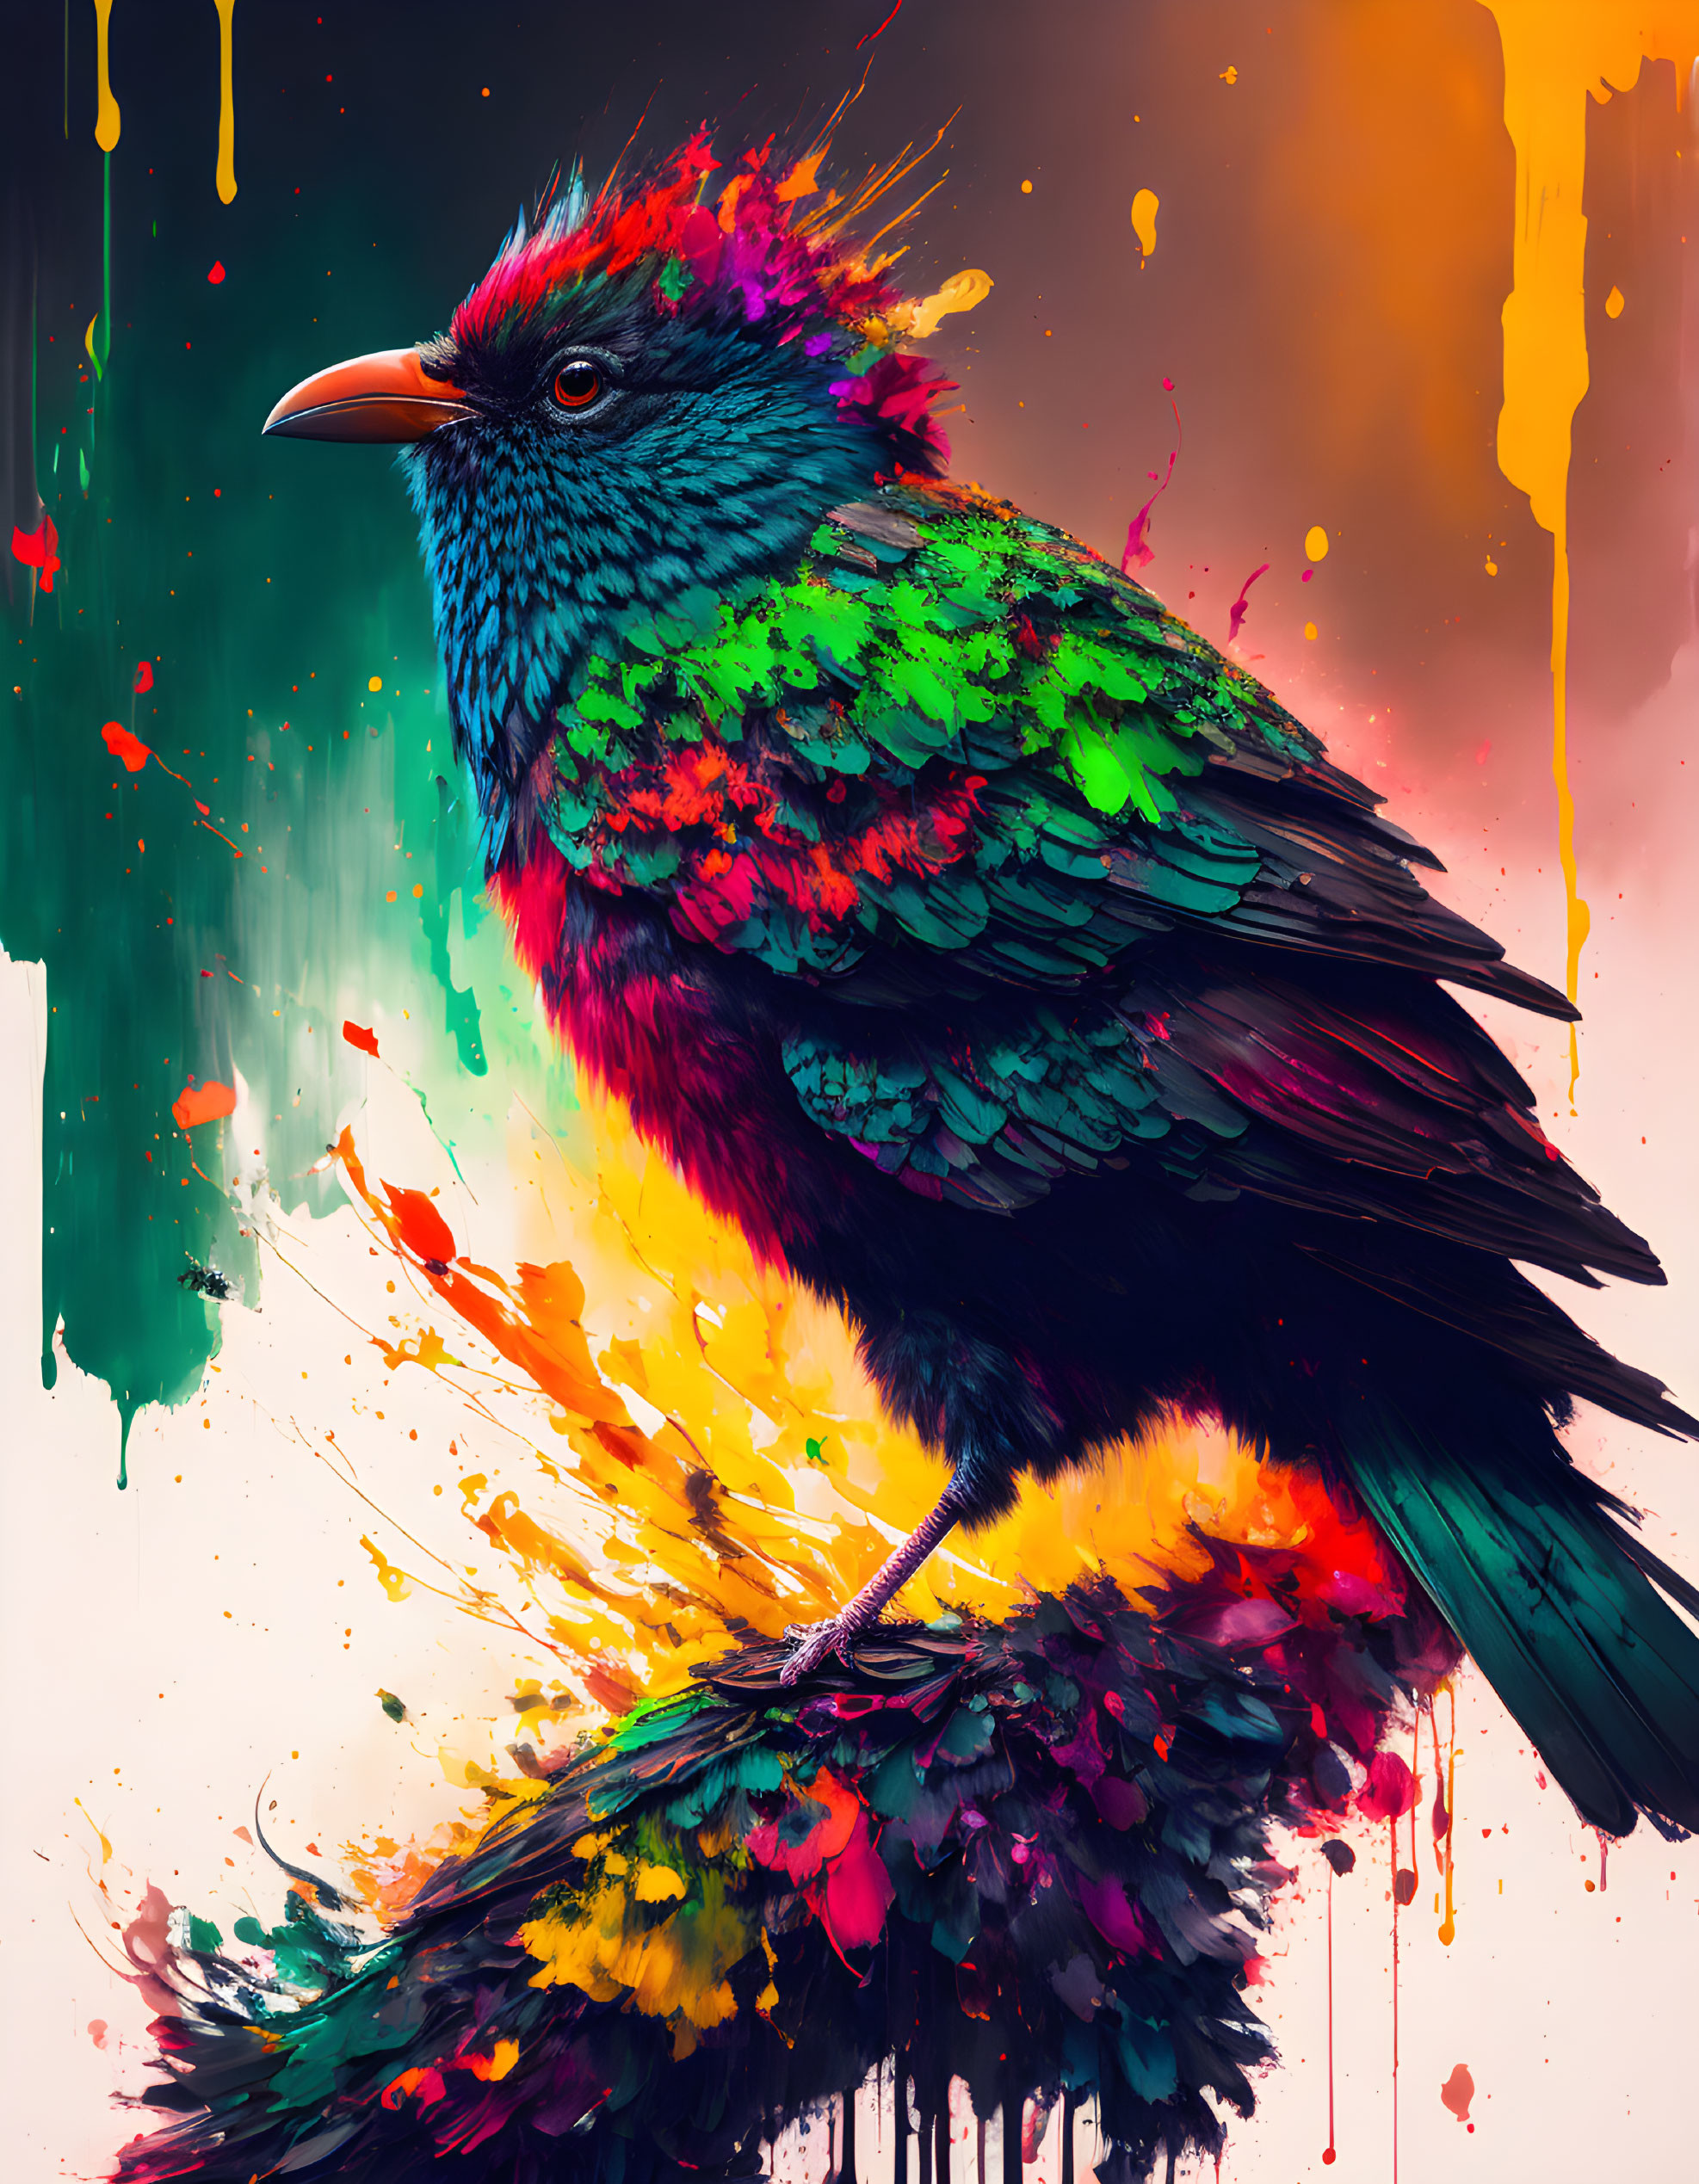 Cuckoo Bird - colorfull vision